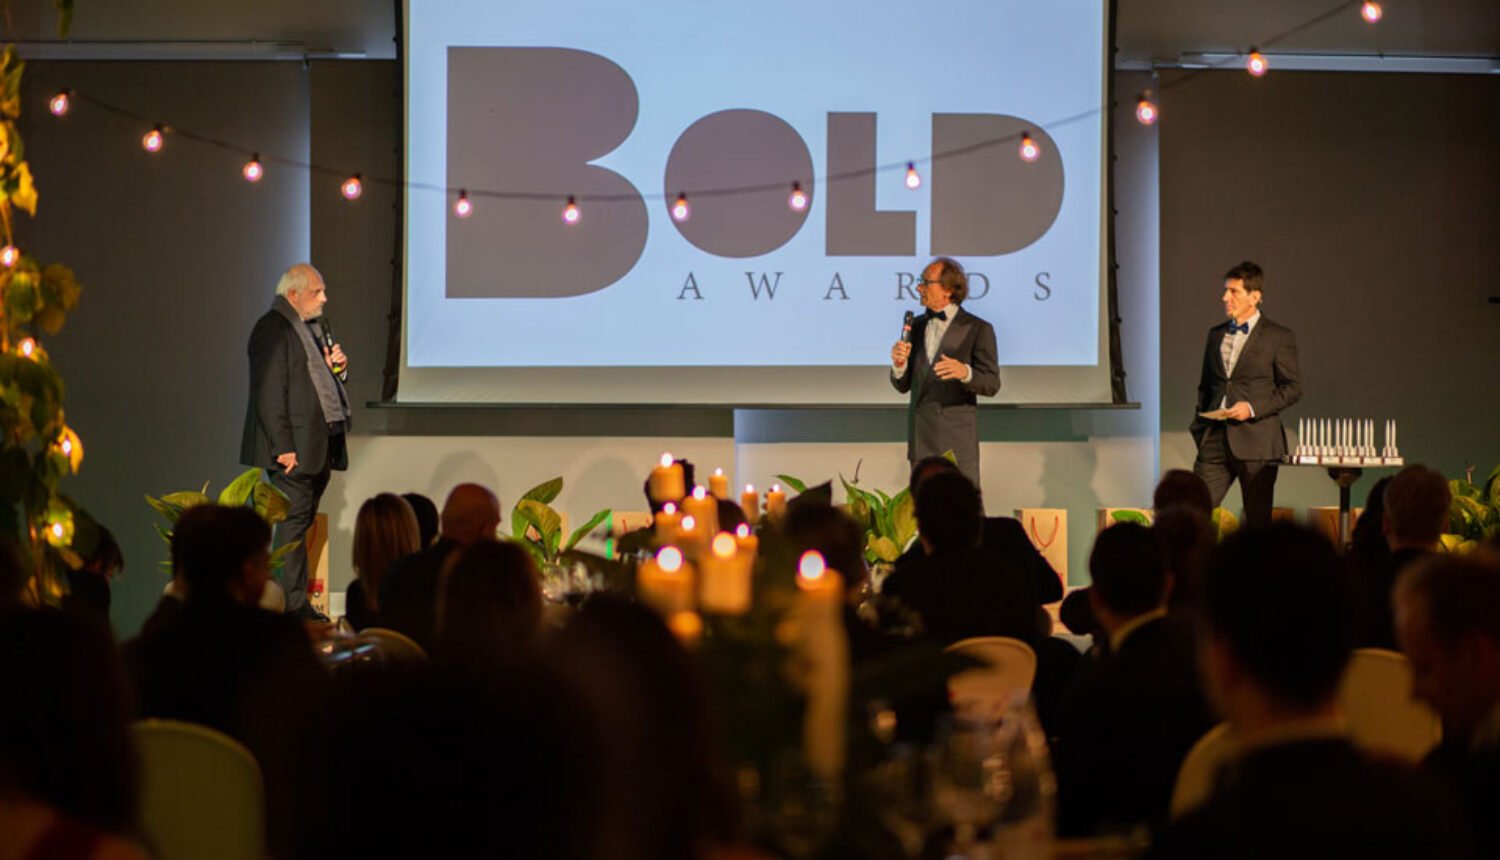 BOLD Awards: the winners